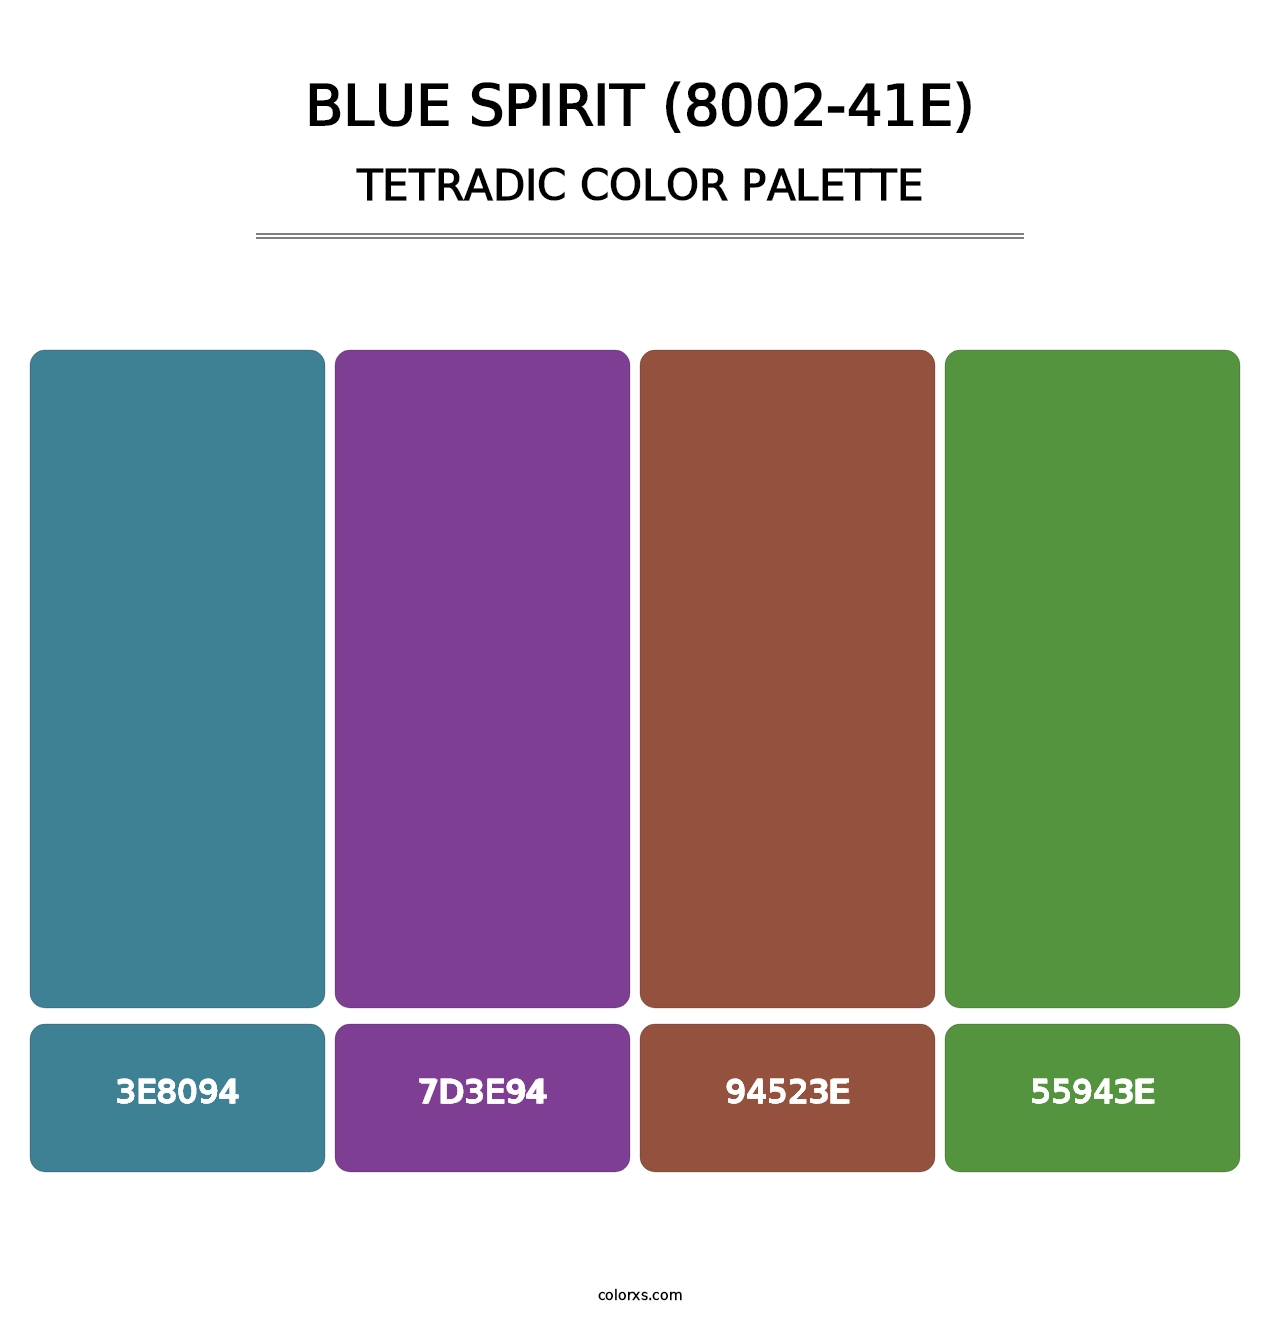 Blue Spirit (8002-41E) - Tetradic Color Palette